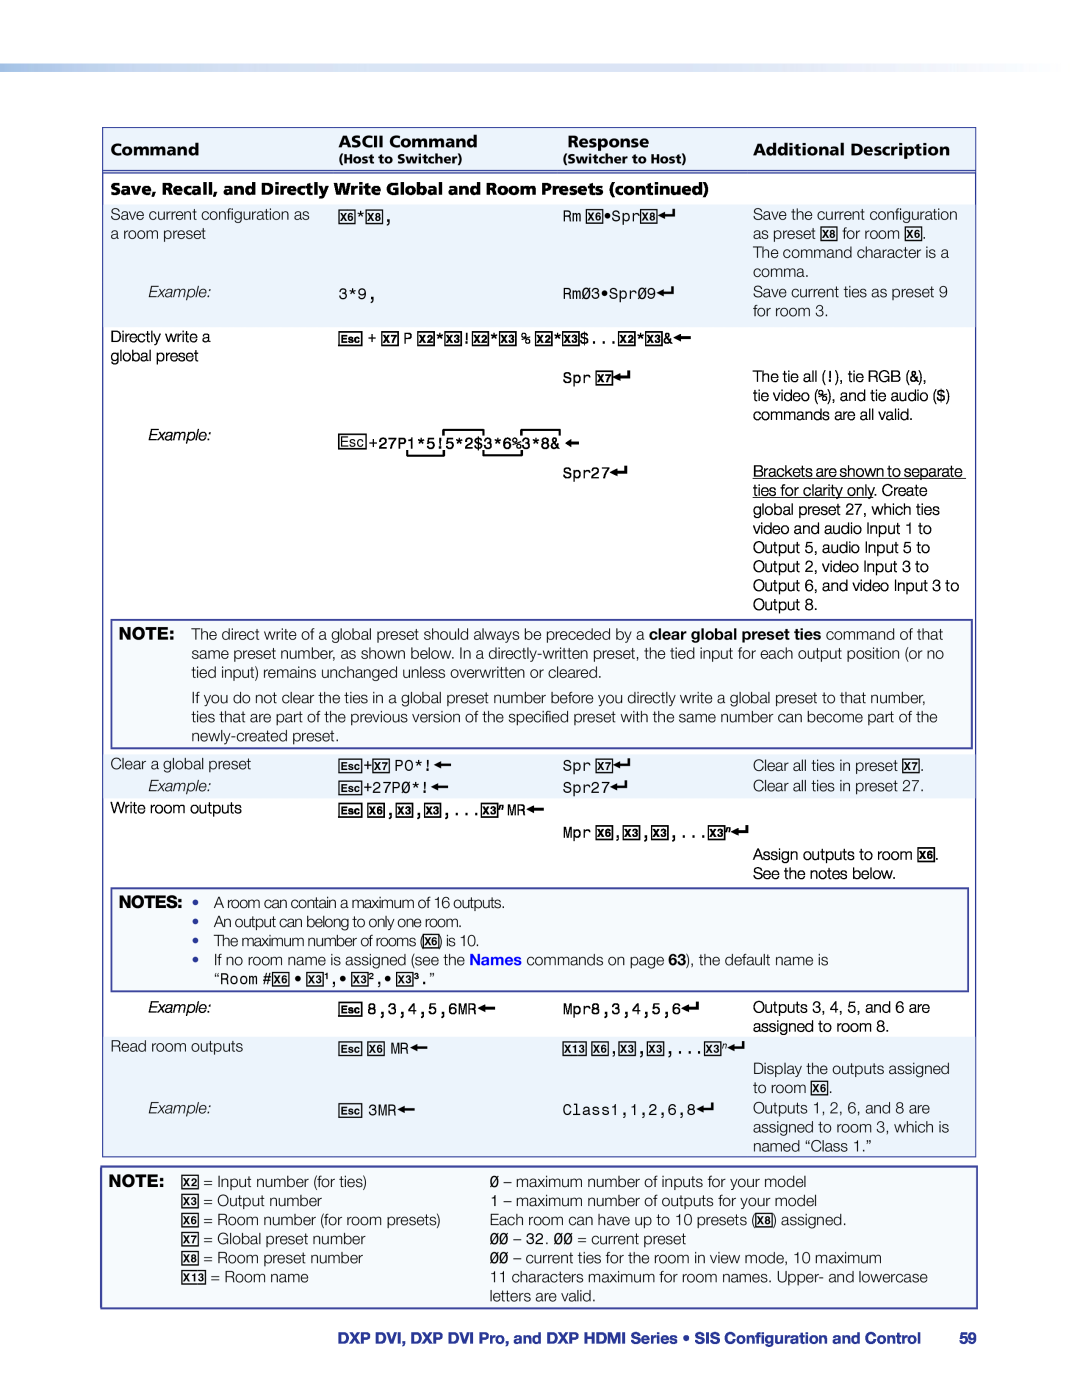 Extron electronic DXP DVI PRO manual ASCII Command, Response, Additional Description, Example 